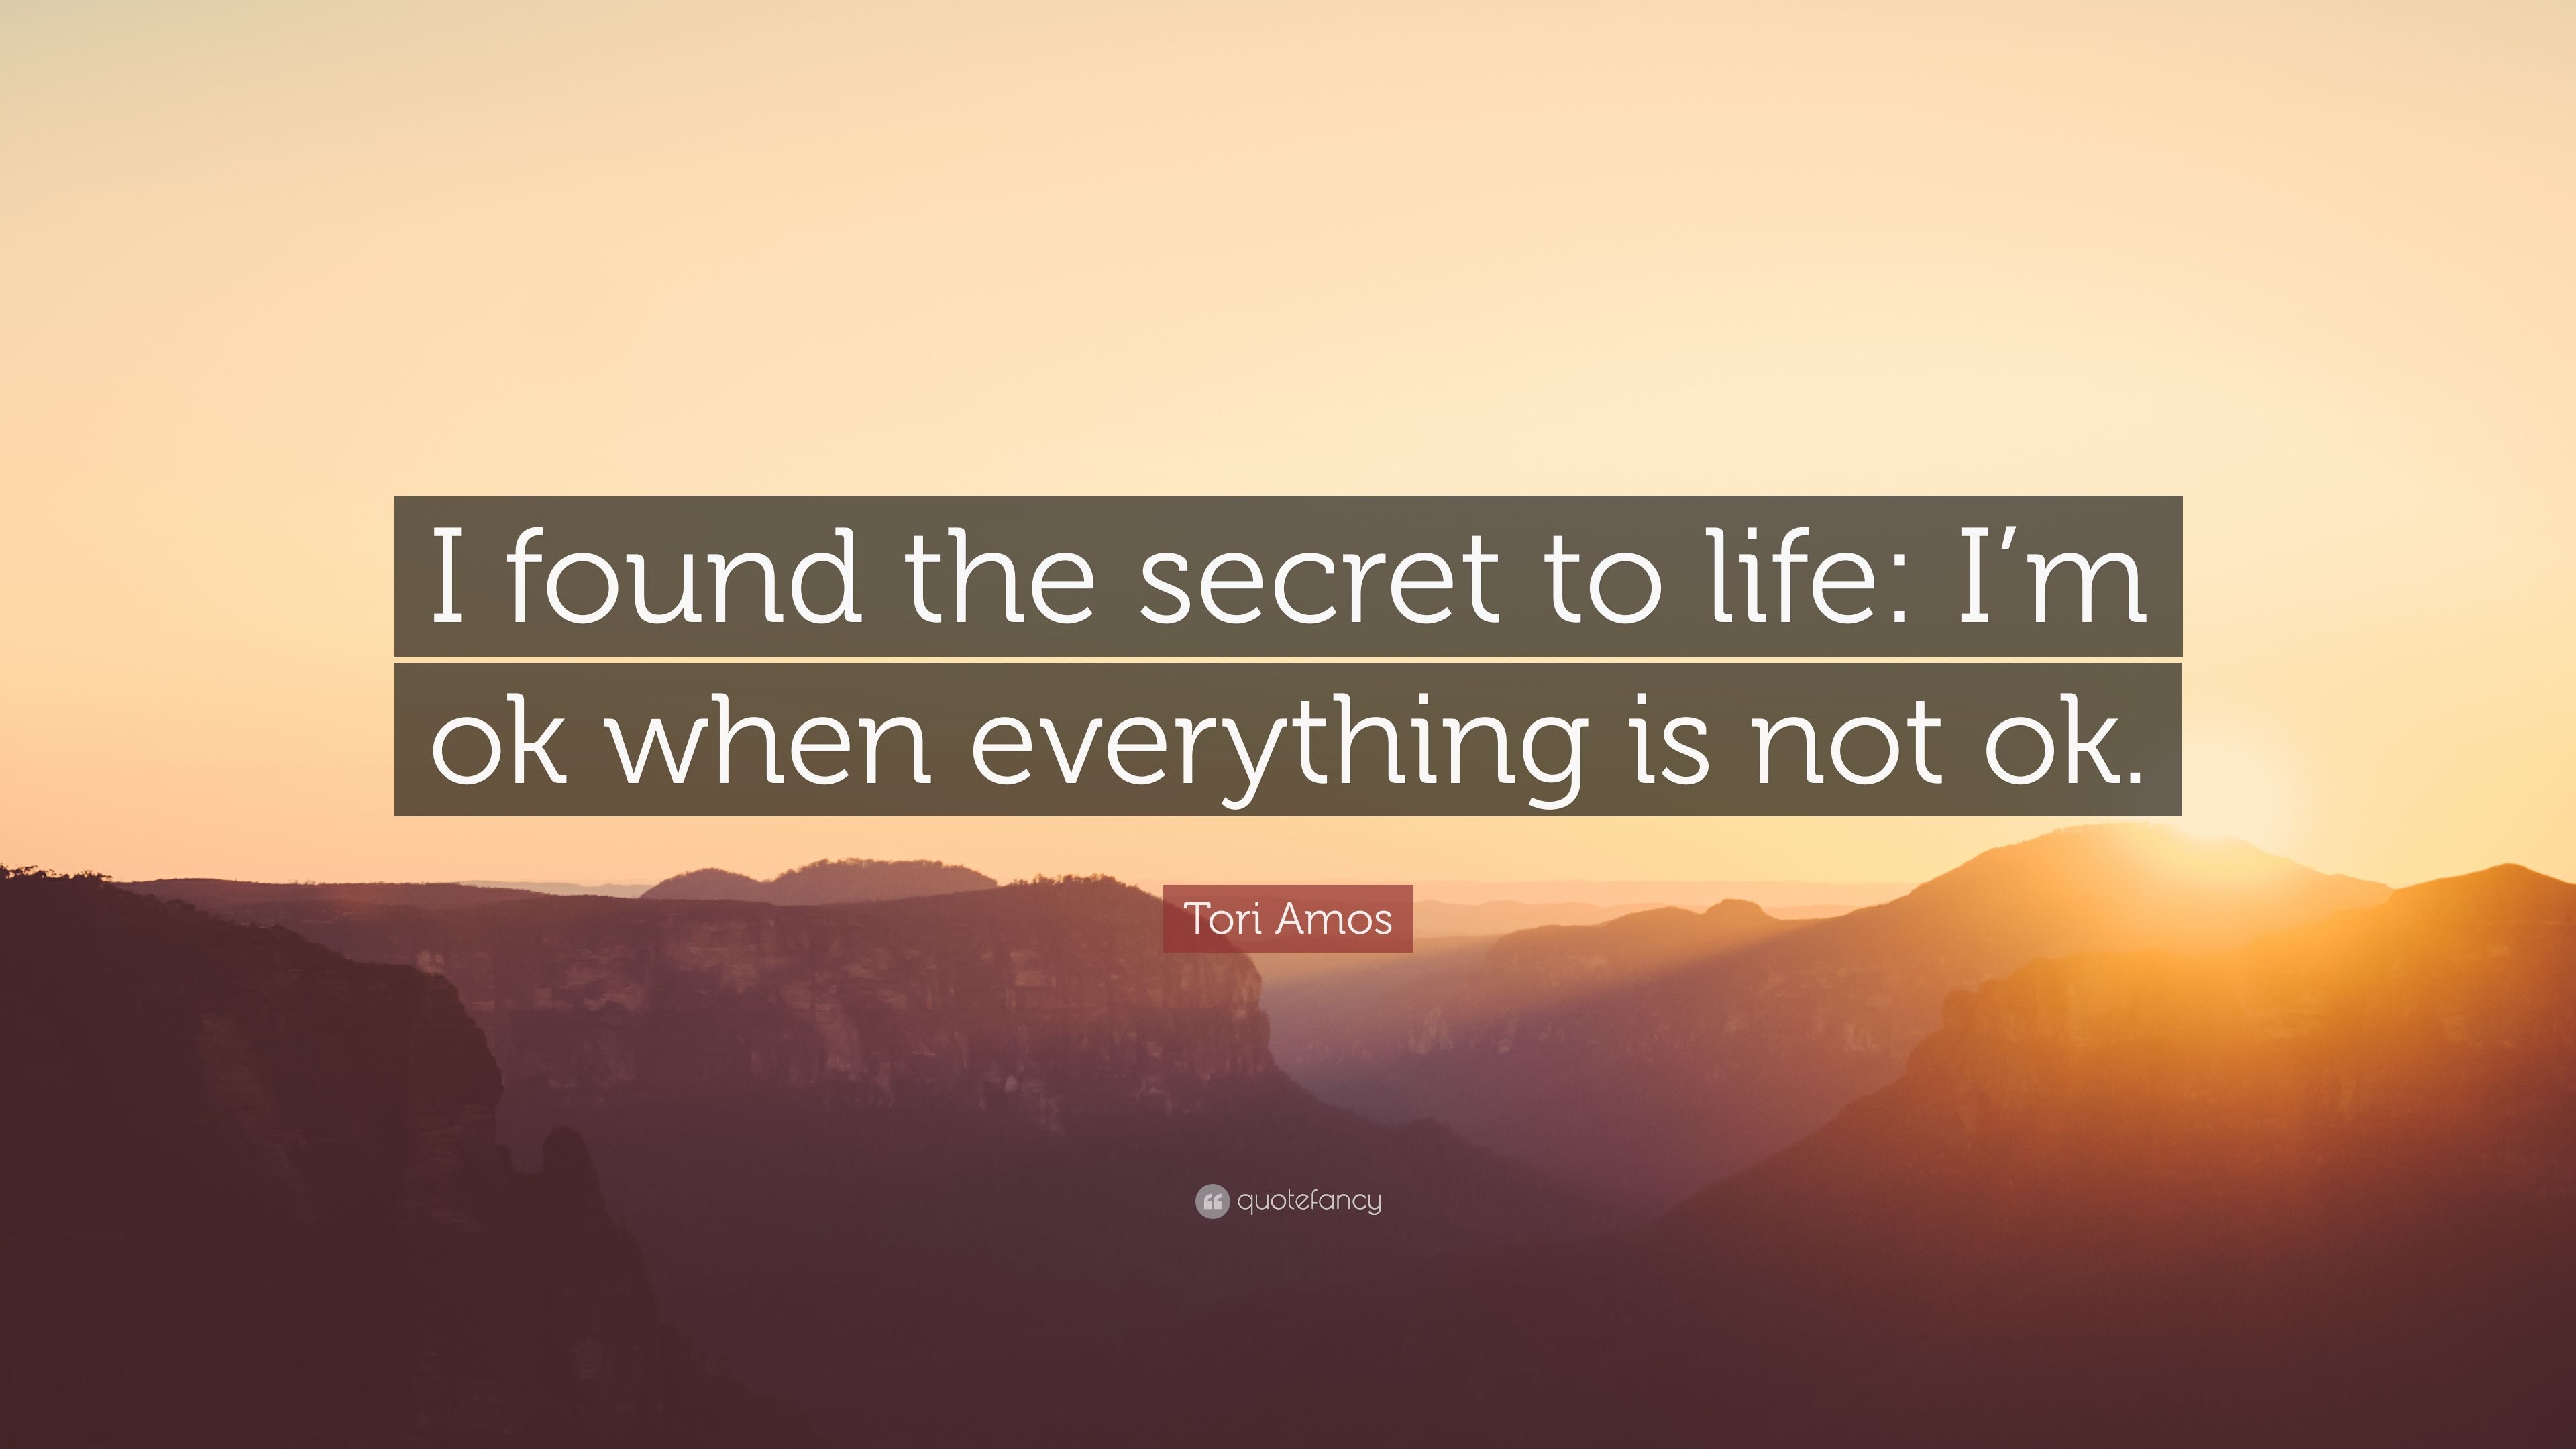 Tori Amos Quote: “I found the secret to life: I'm ok when